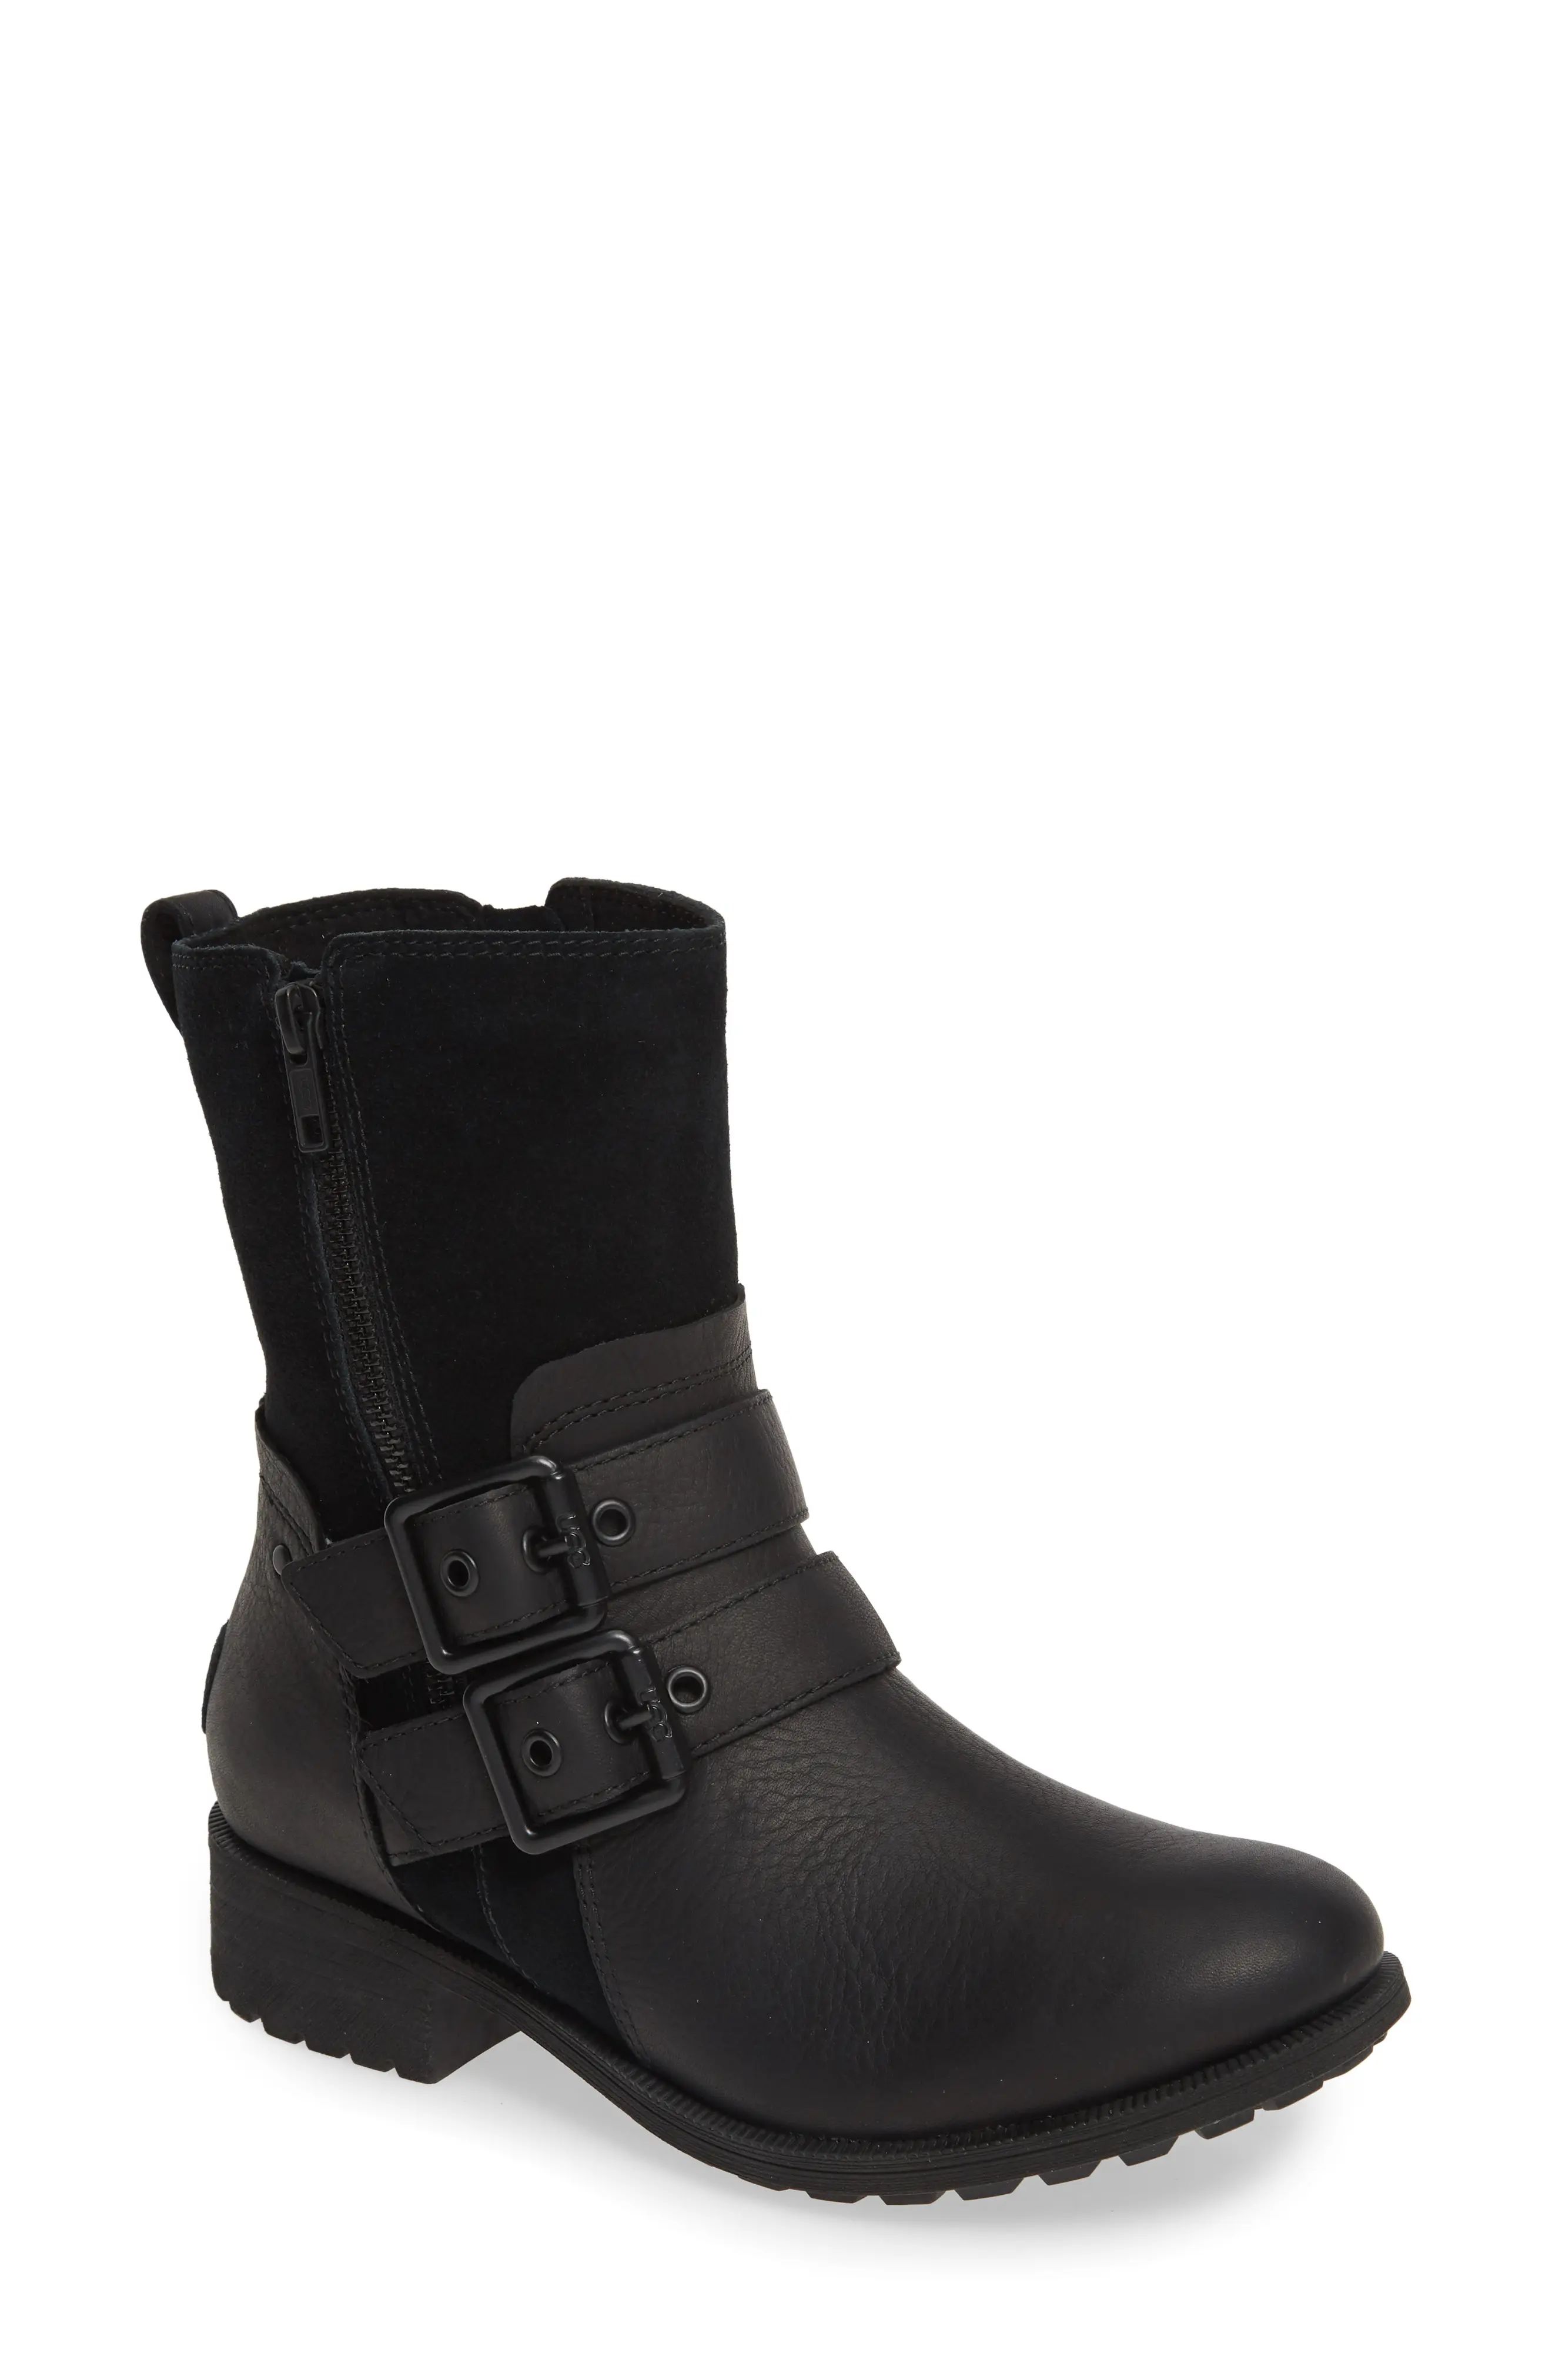 Women's UGG Wilde Waterproof Leather Boot, Size 5 M - Black | Nordstrom